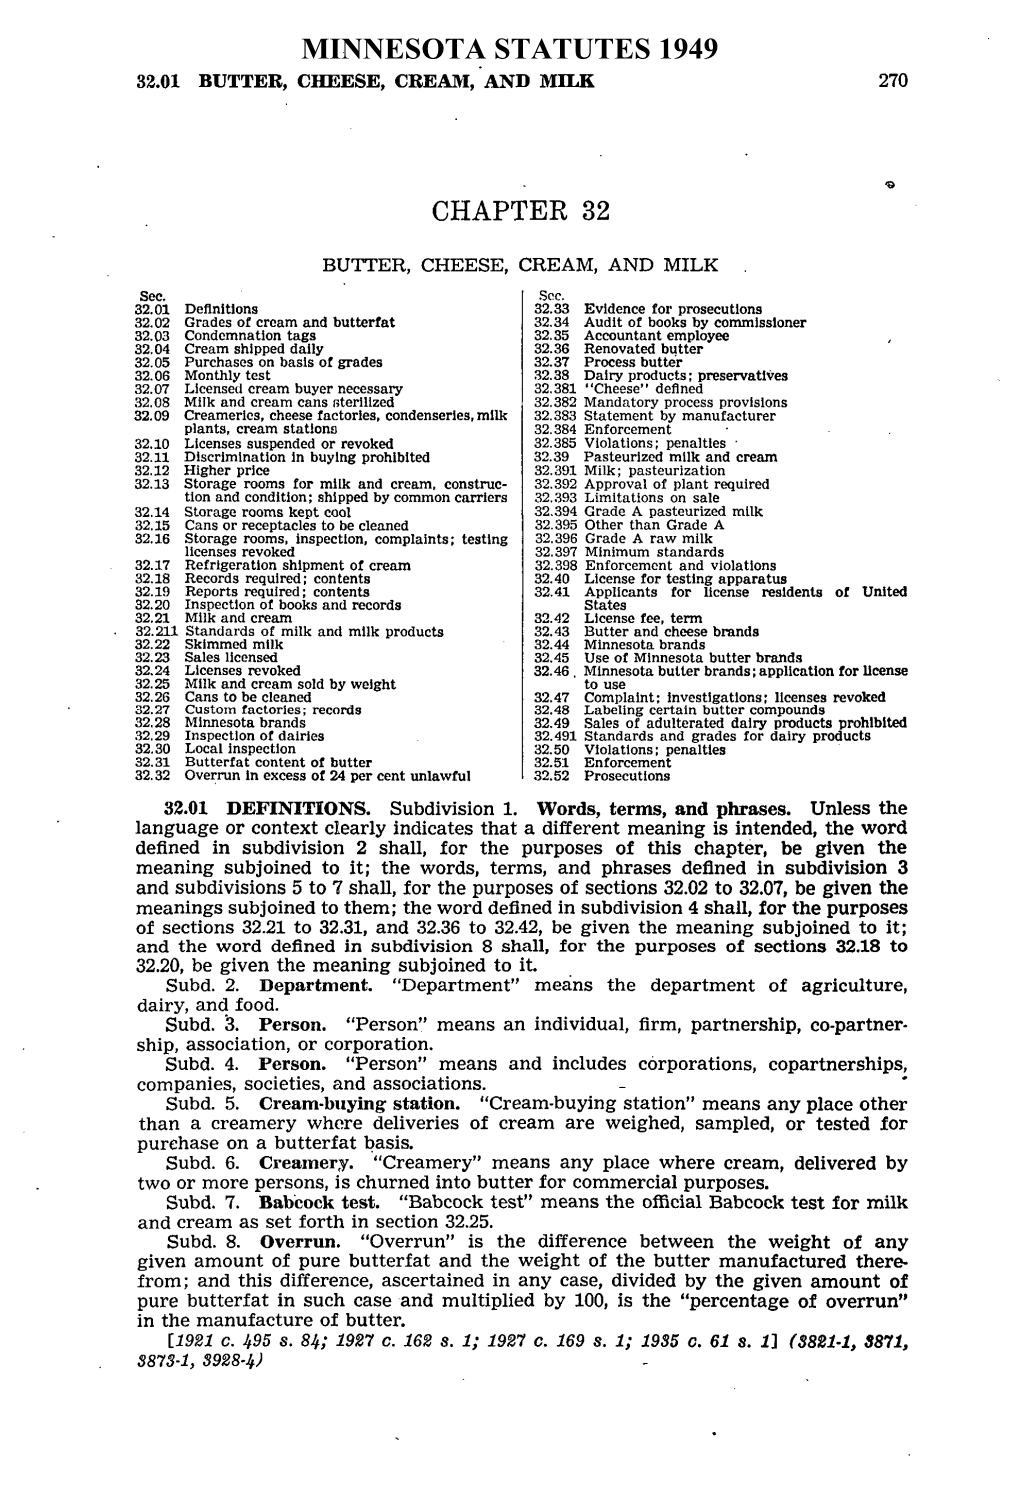 Chapter 32 Minnesota Statutes 1949